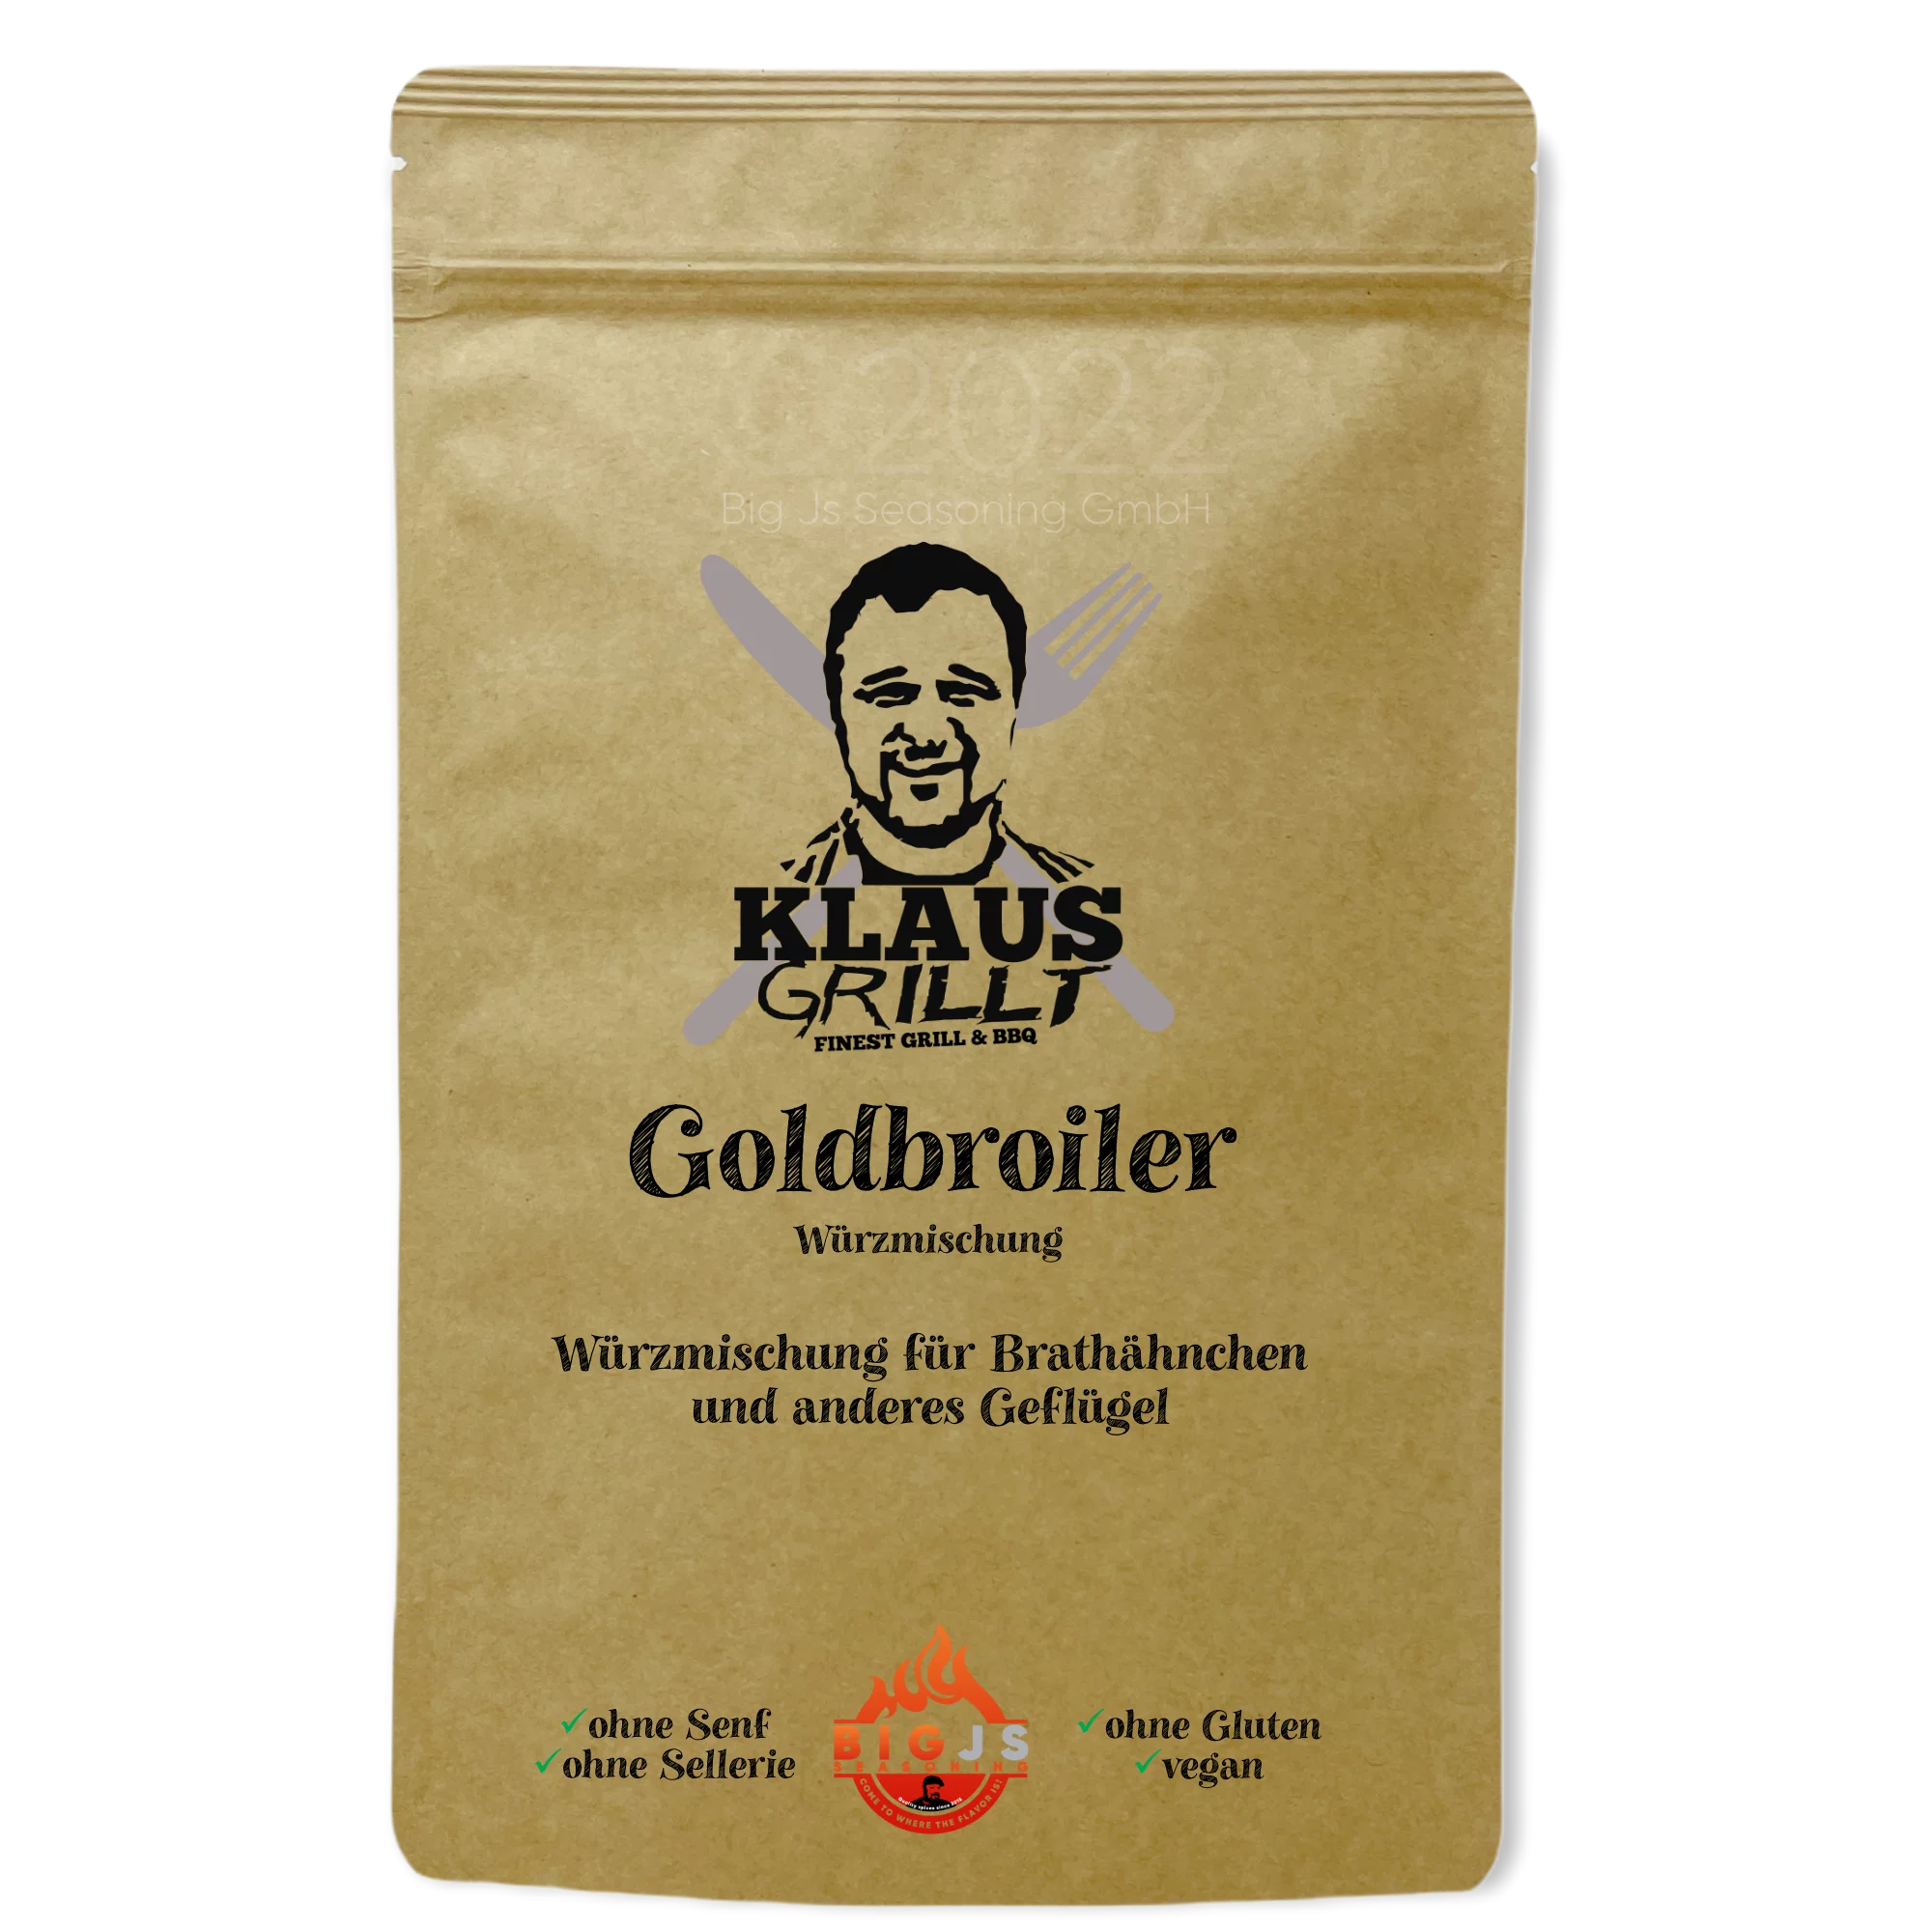 Klaus grillt, Goldbroiler, 750g Standbeutel